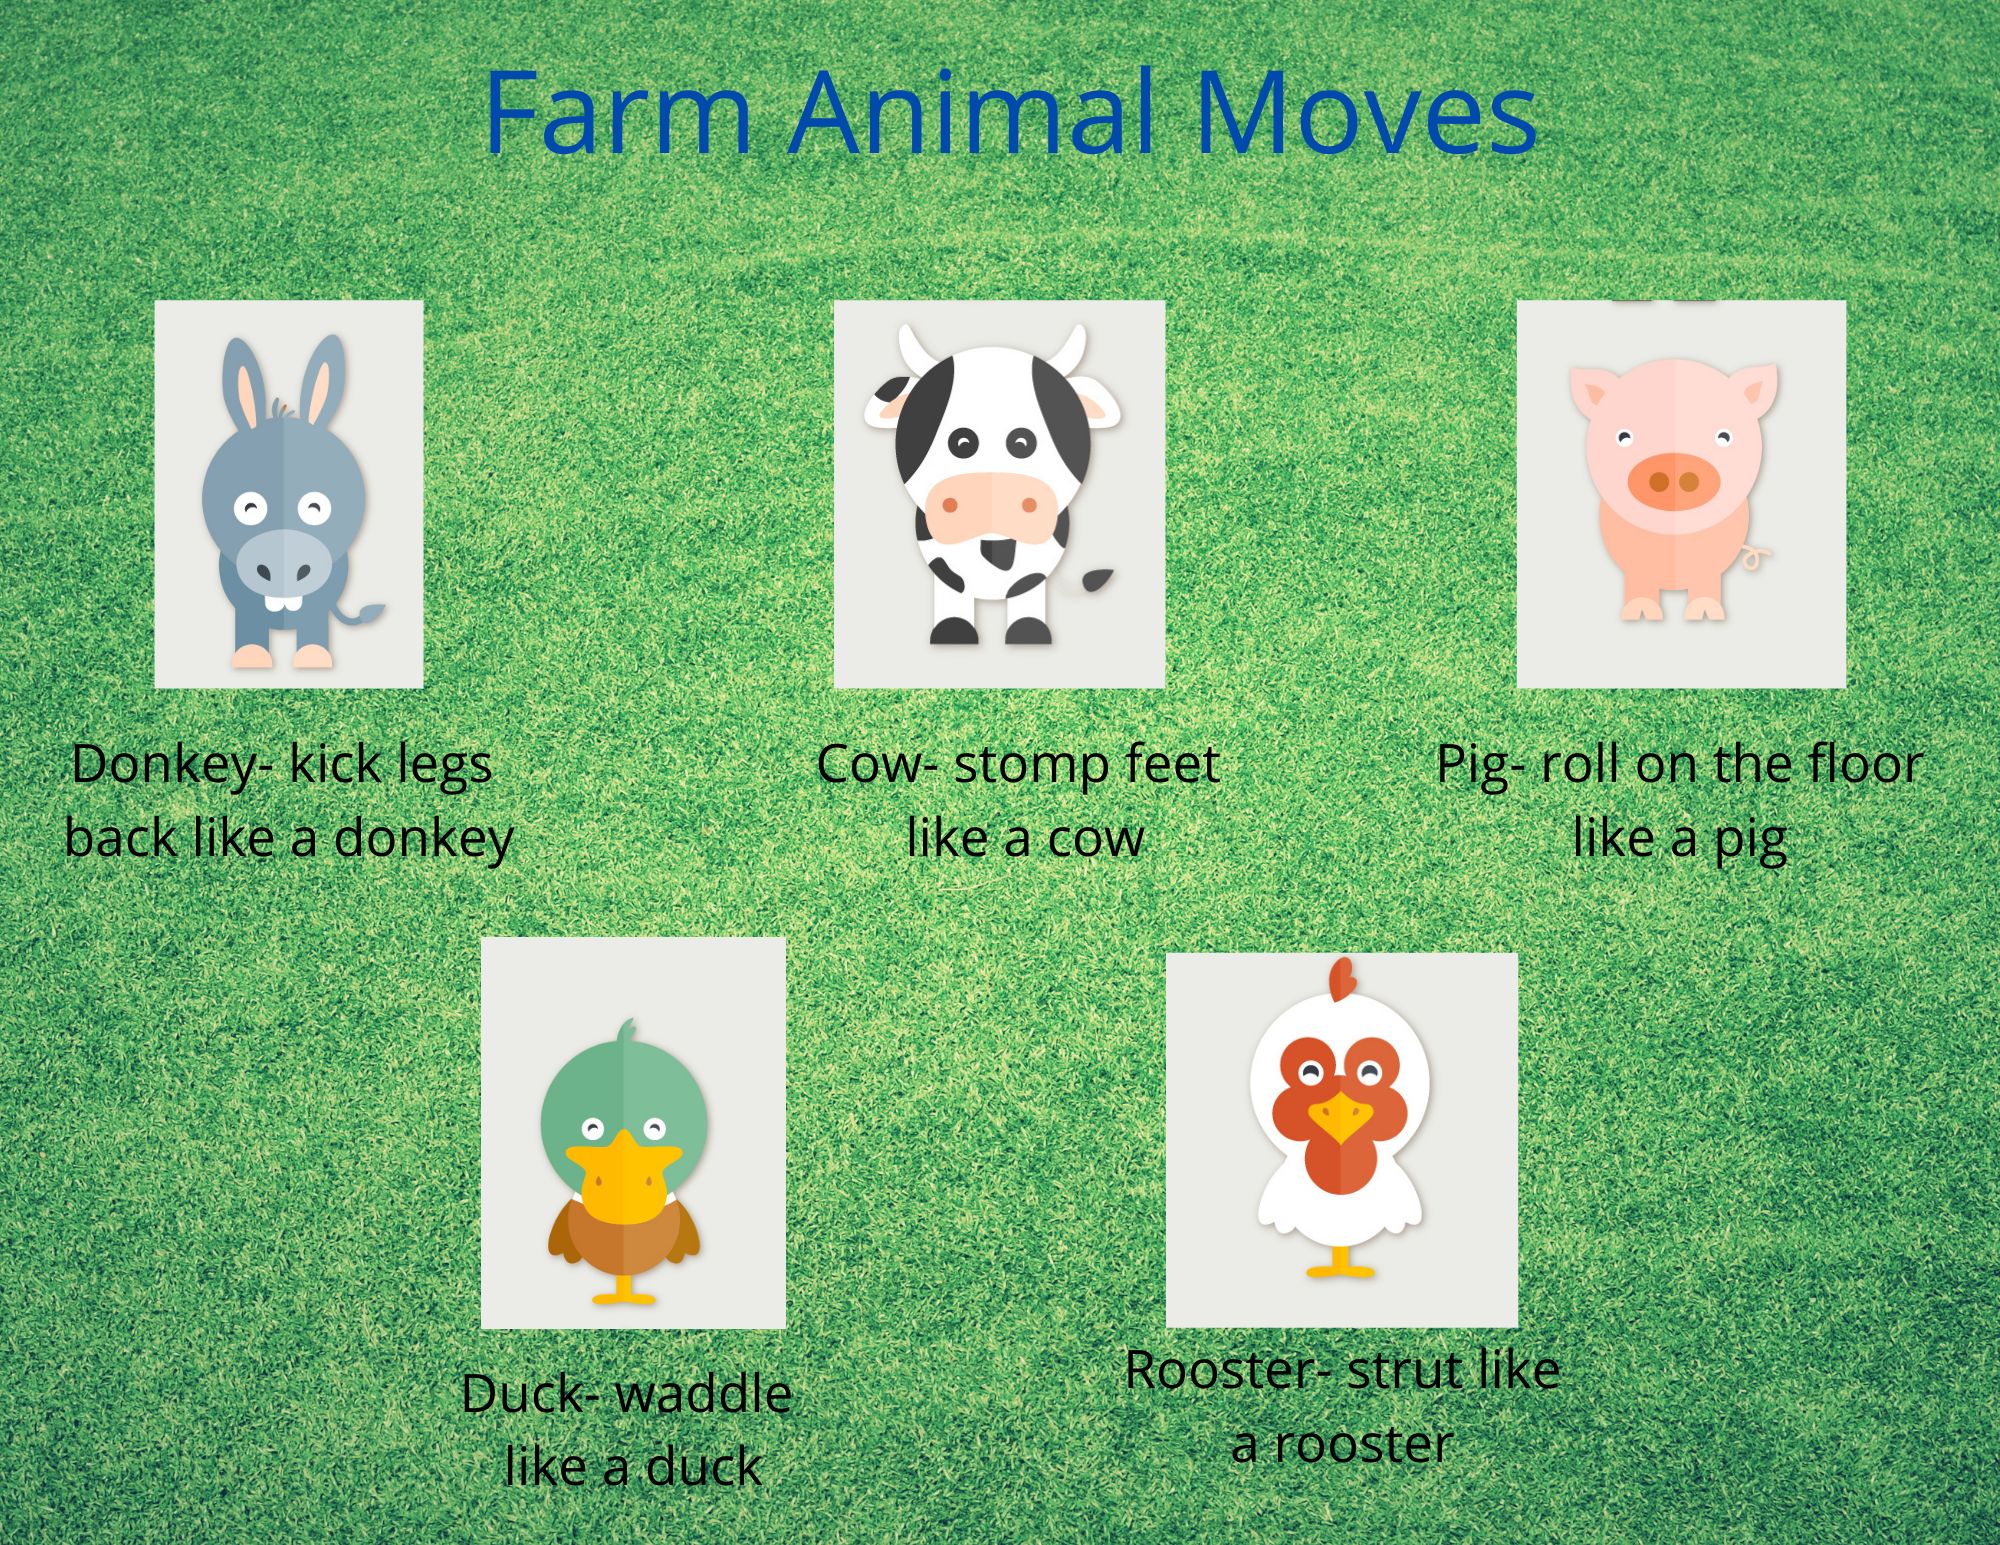 Farm Animal Moves image